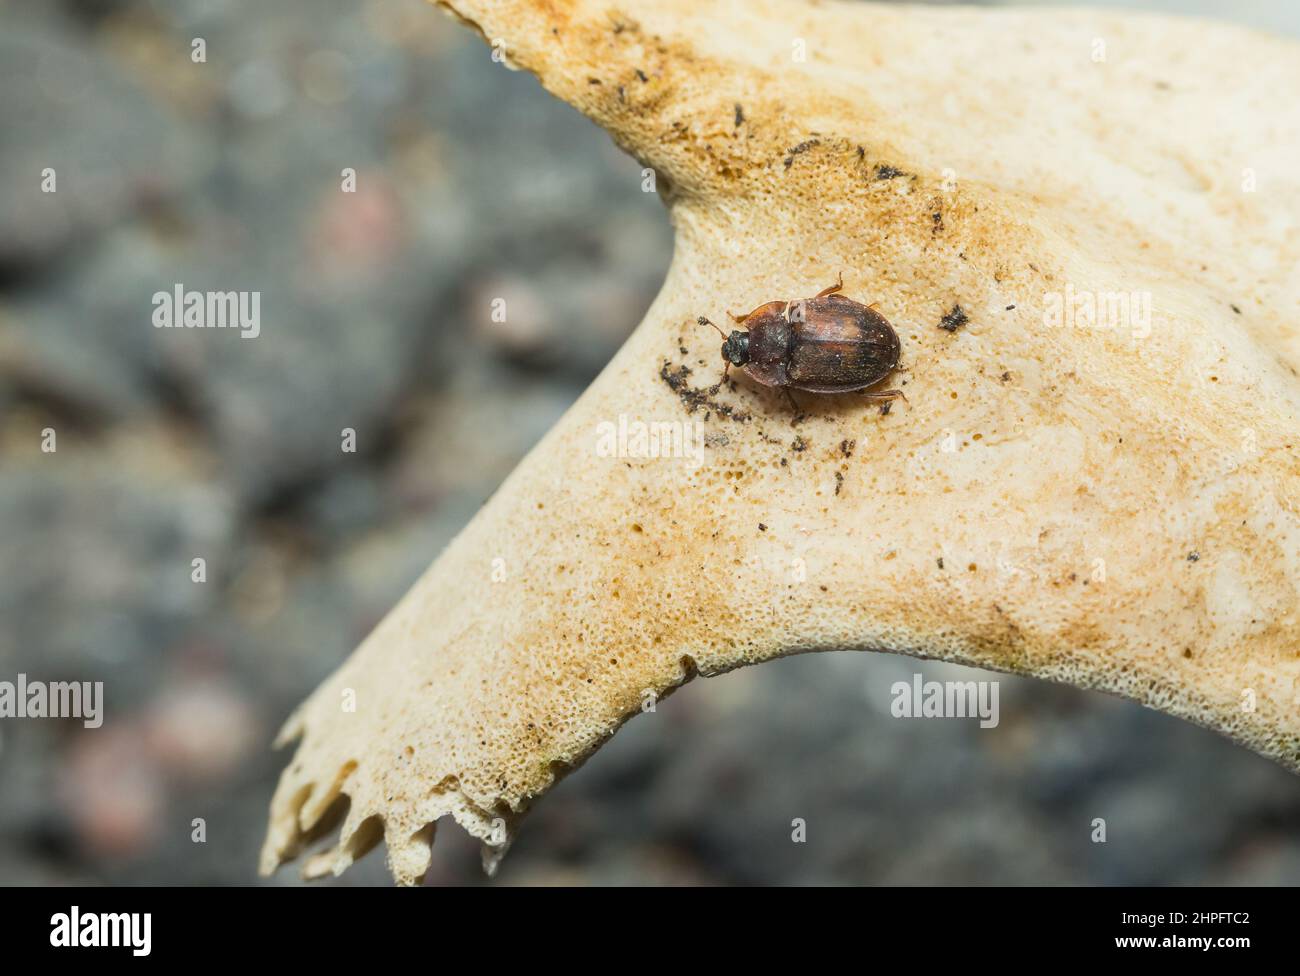 Sap feeding beetle (Omosita depressa) on animal bones Stock Photo